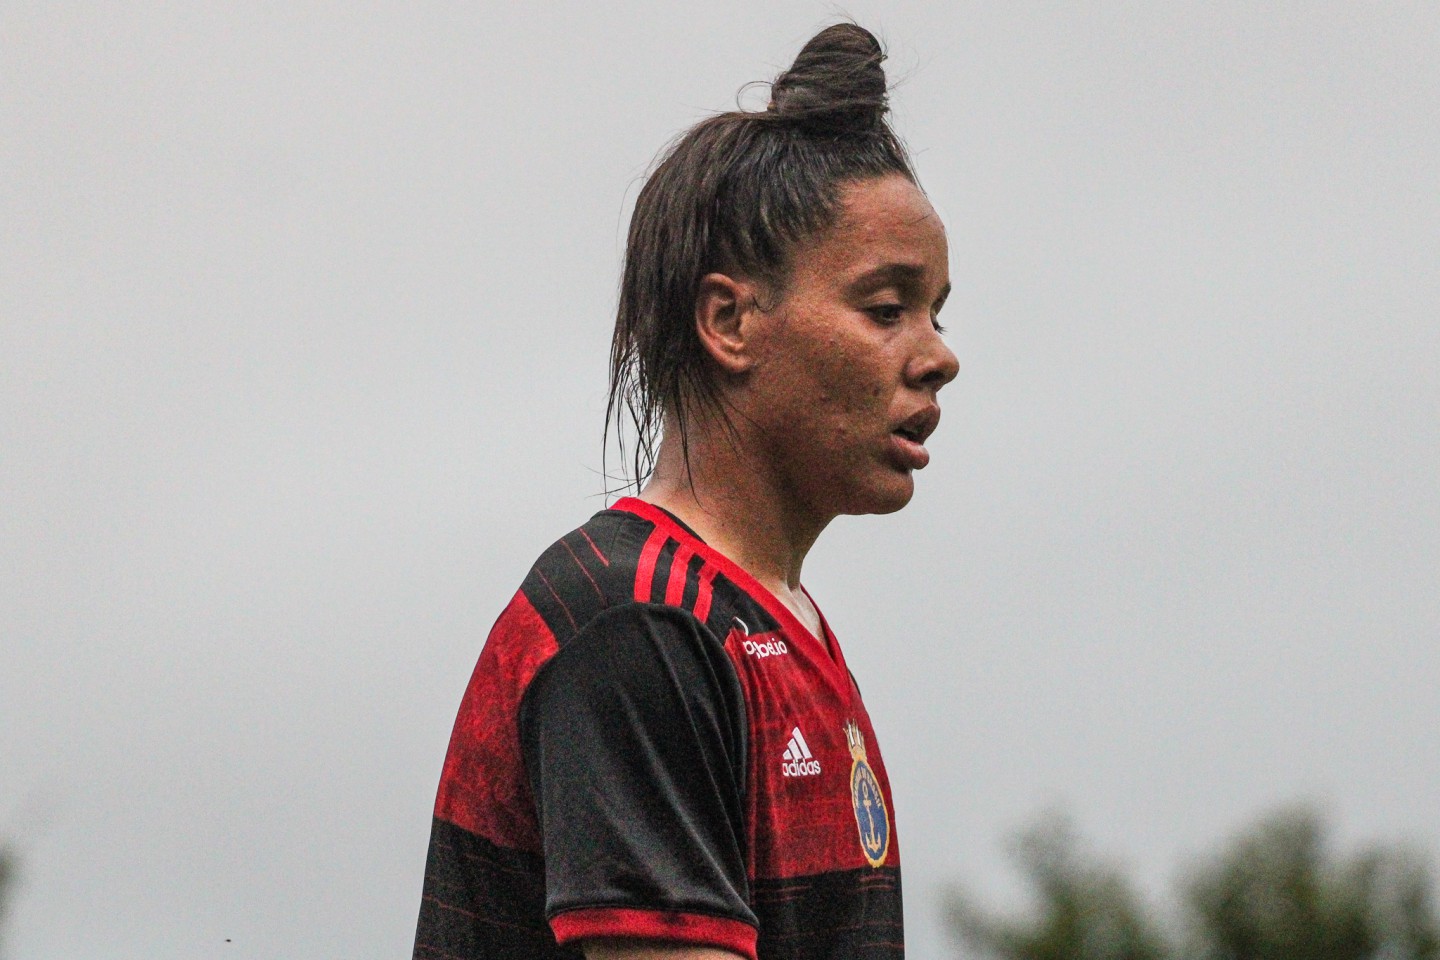 Rafa Barros superou fase difícil para virar artilheira do Flamengo no Brasileiro Feminino A 1